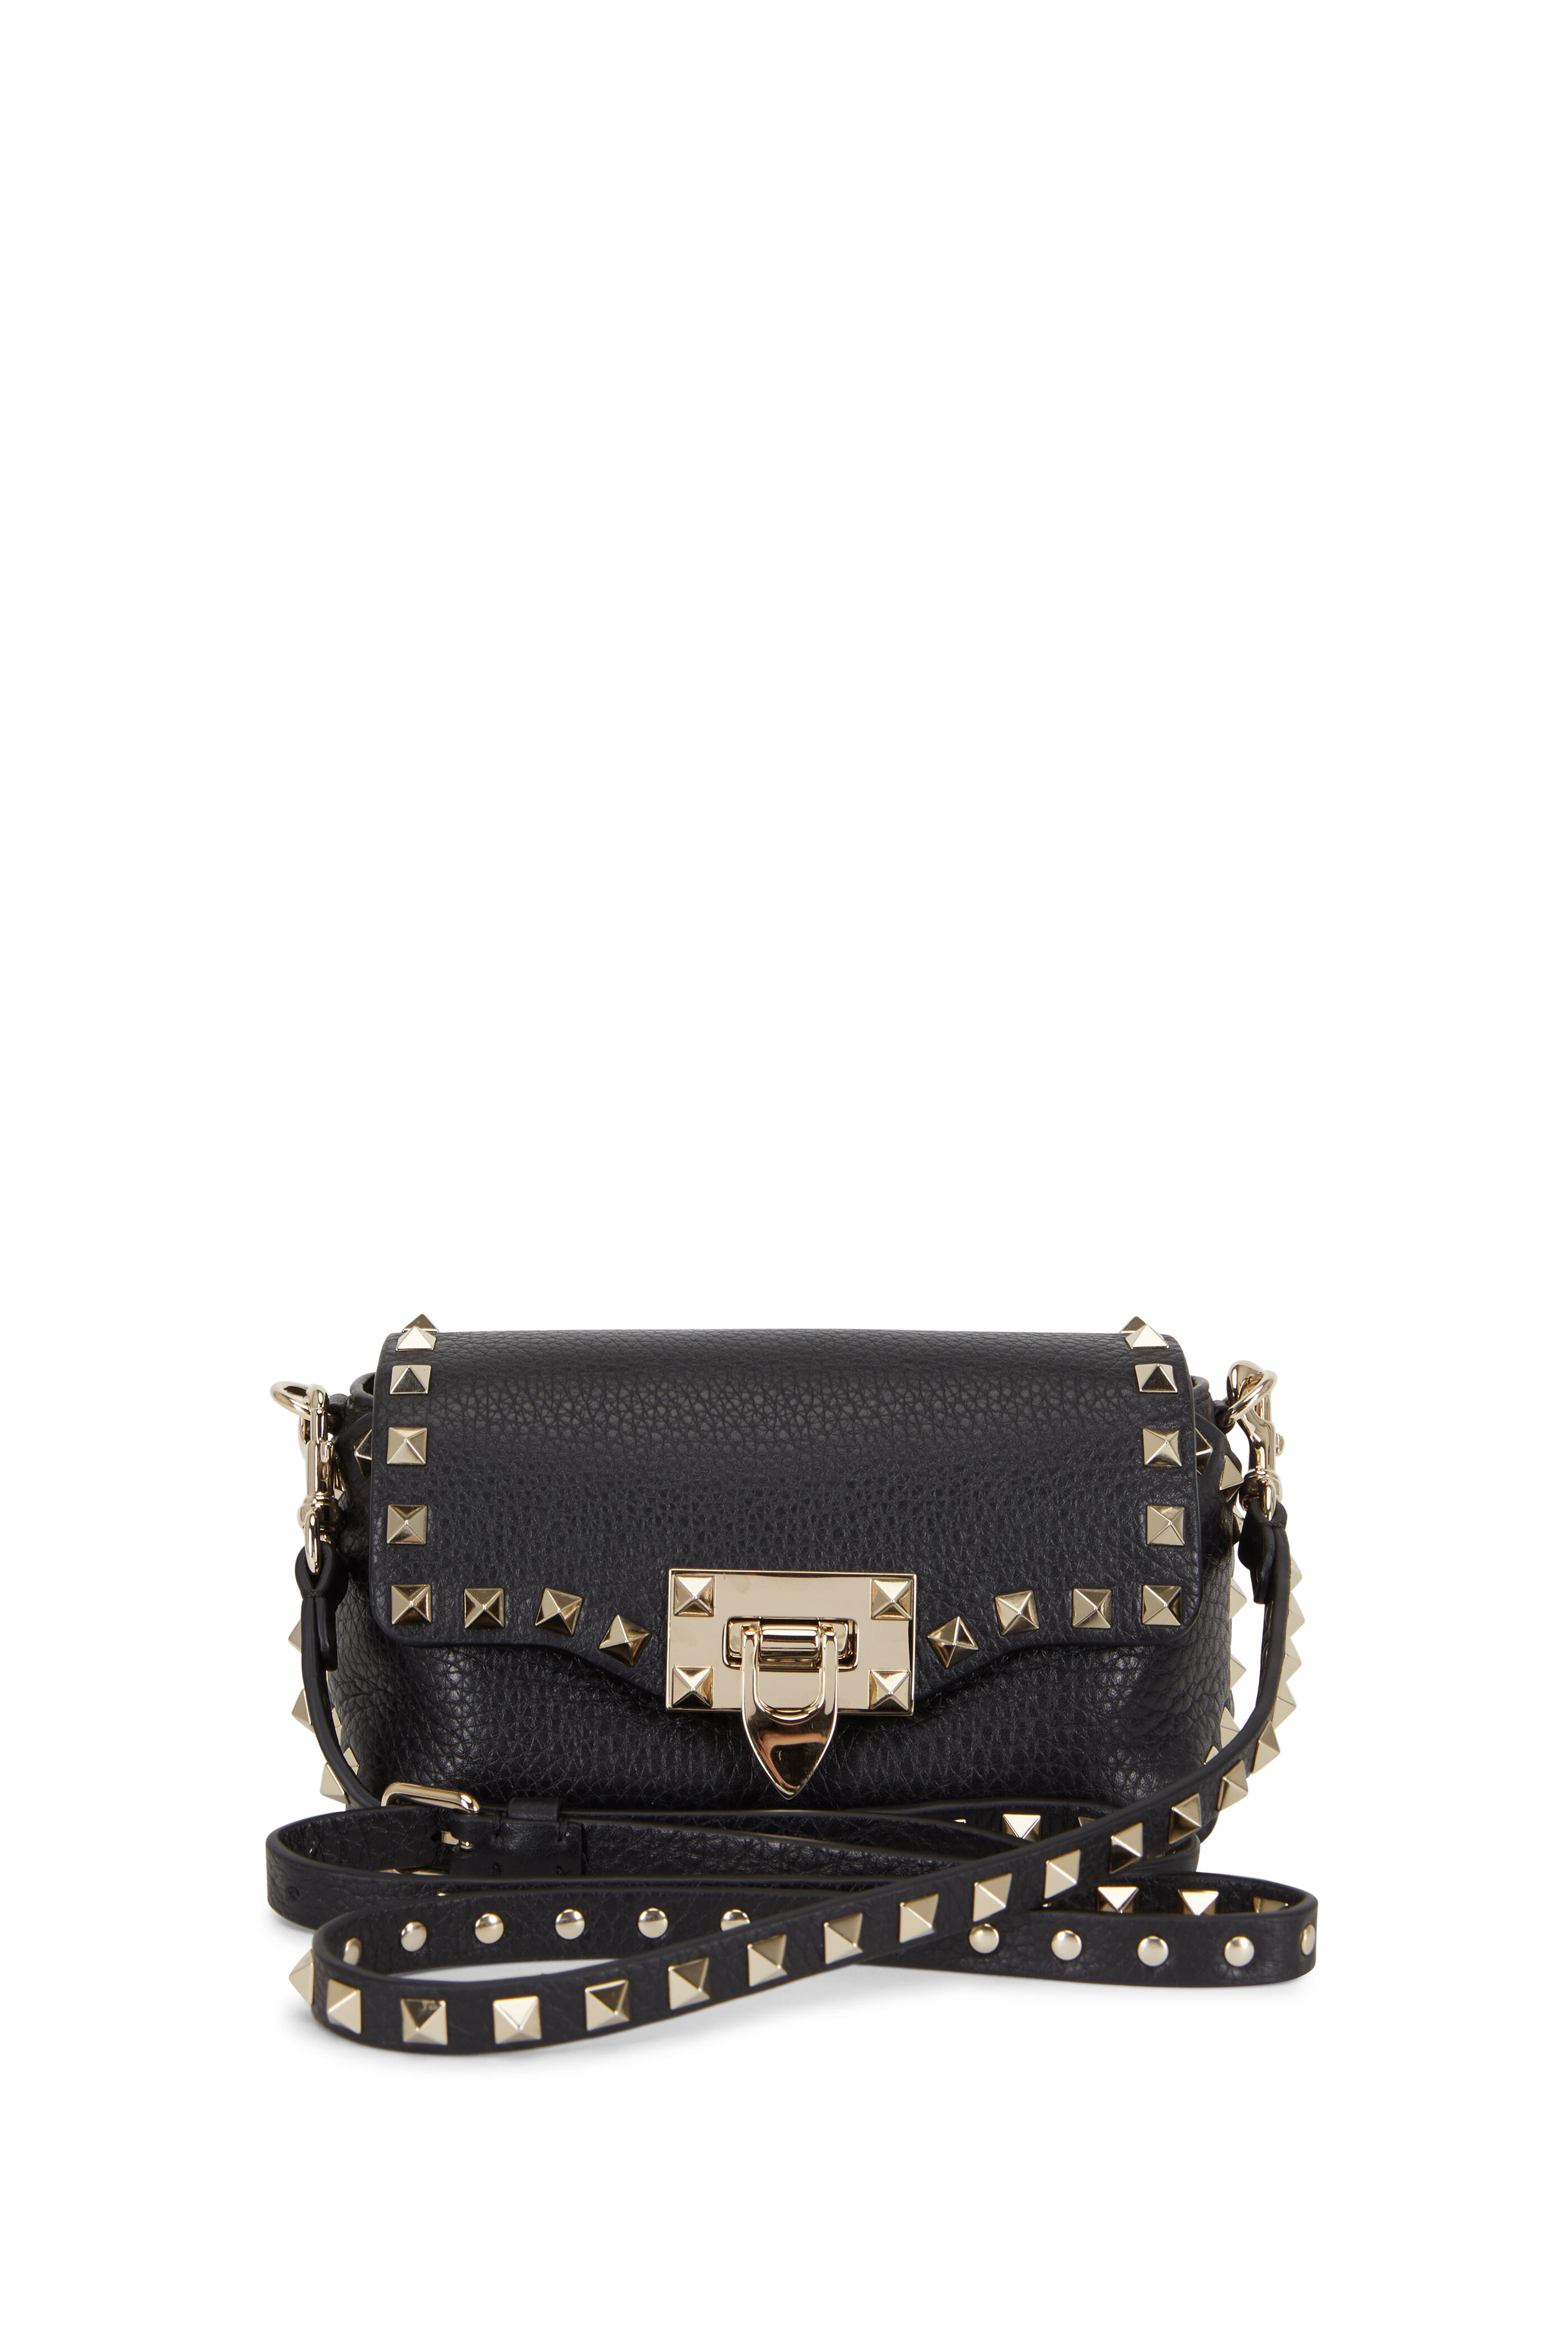 Rockstud Small Leather Crossbody Bag in Black - Valentino Garavani